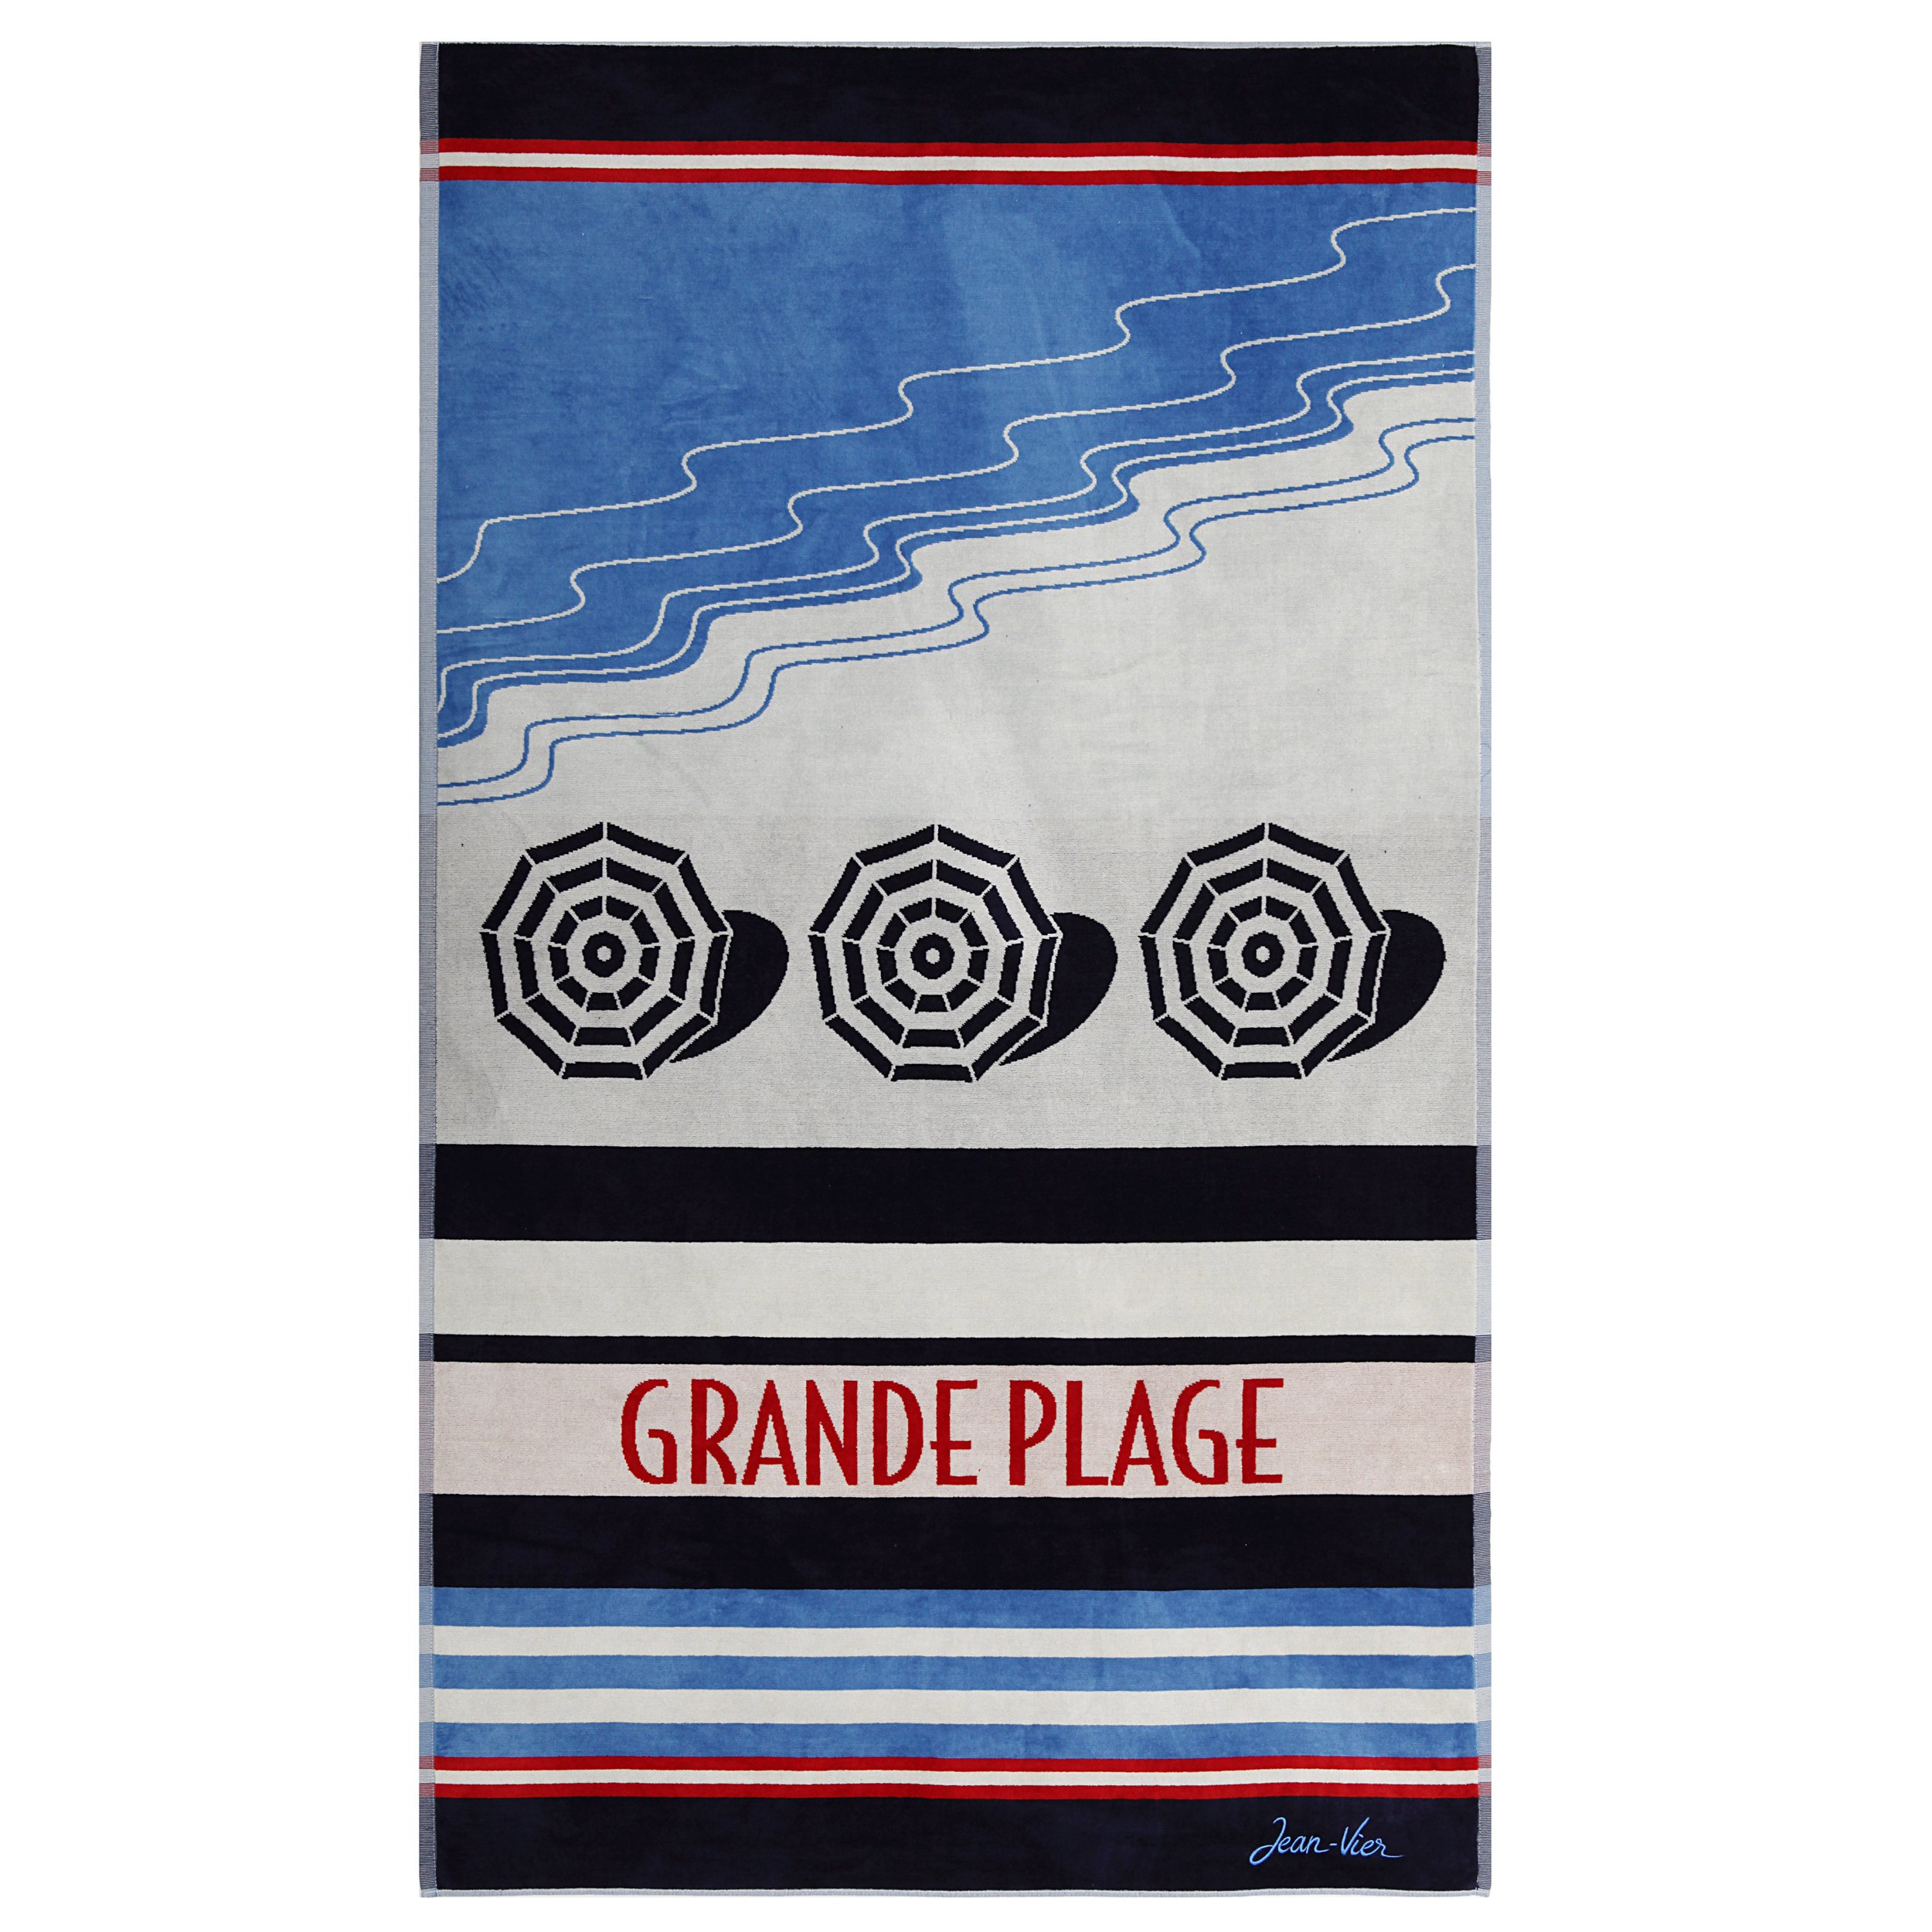 10. Luxe Beach Towel Grand Plage (Olatua) by Creations Jean-Vier €76.98, 